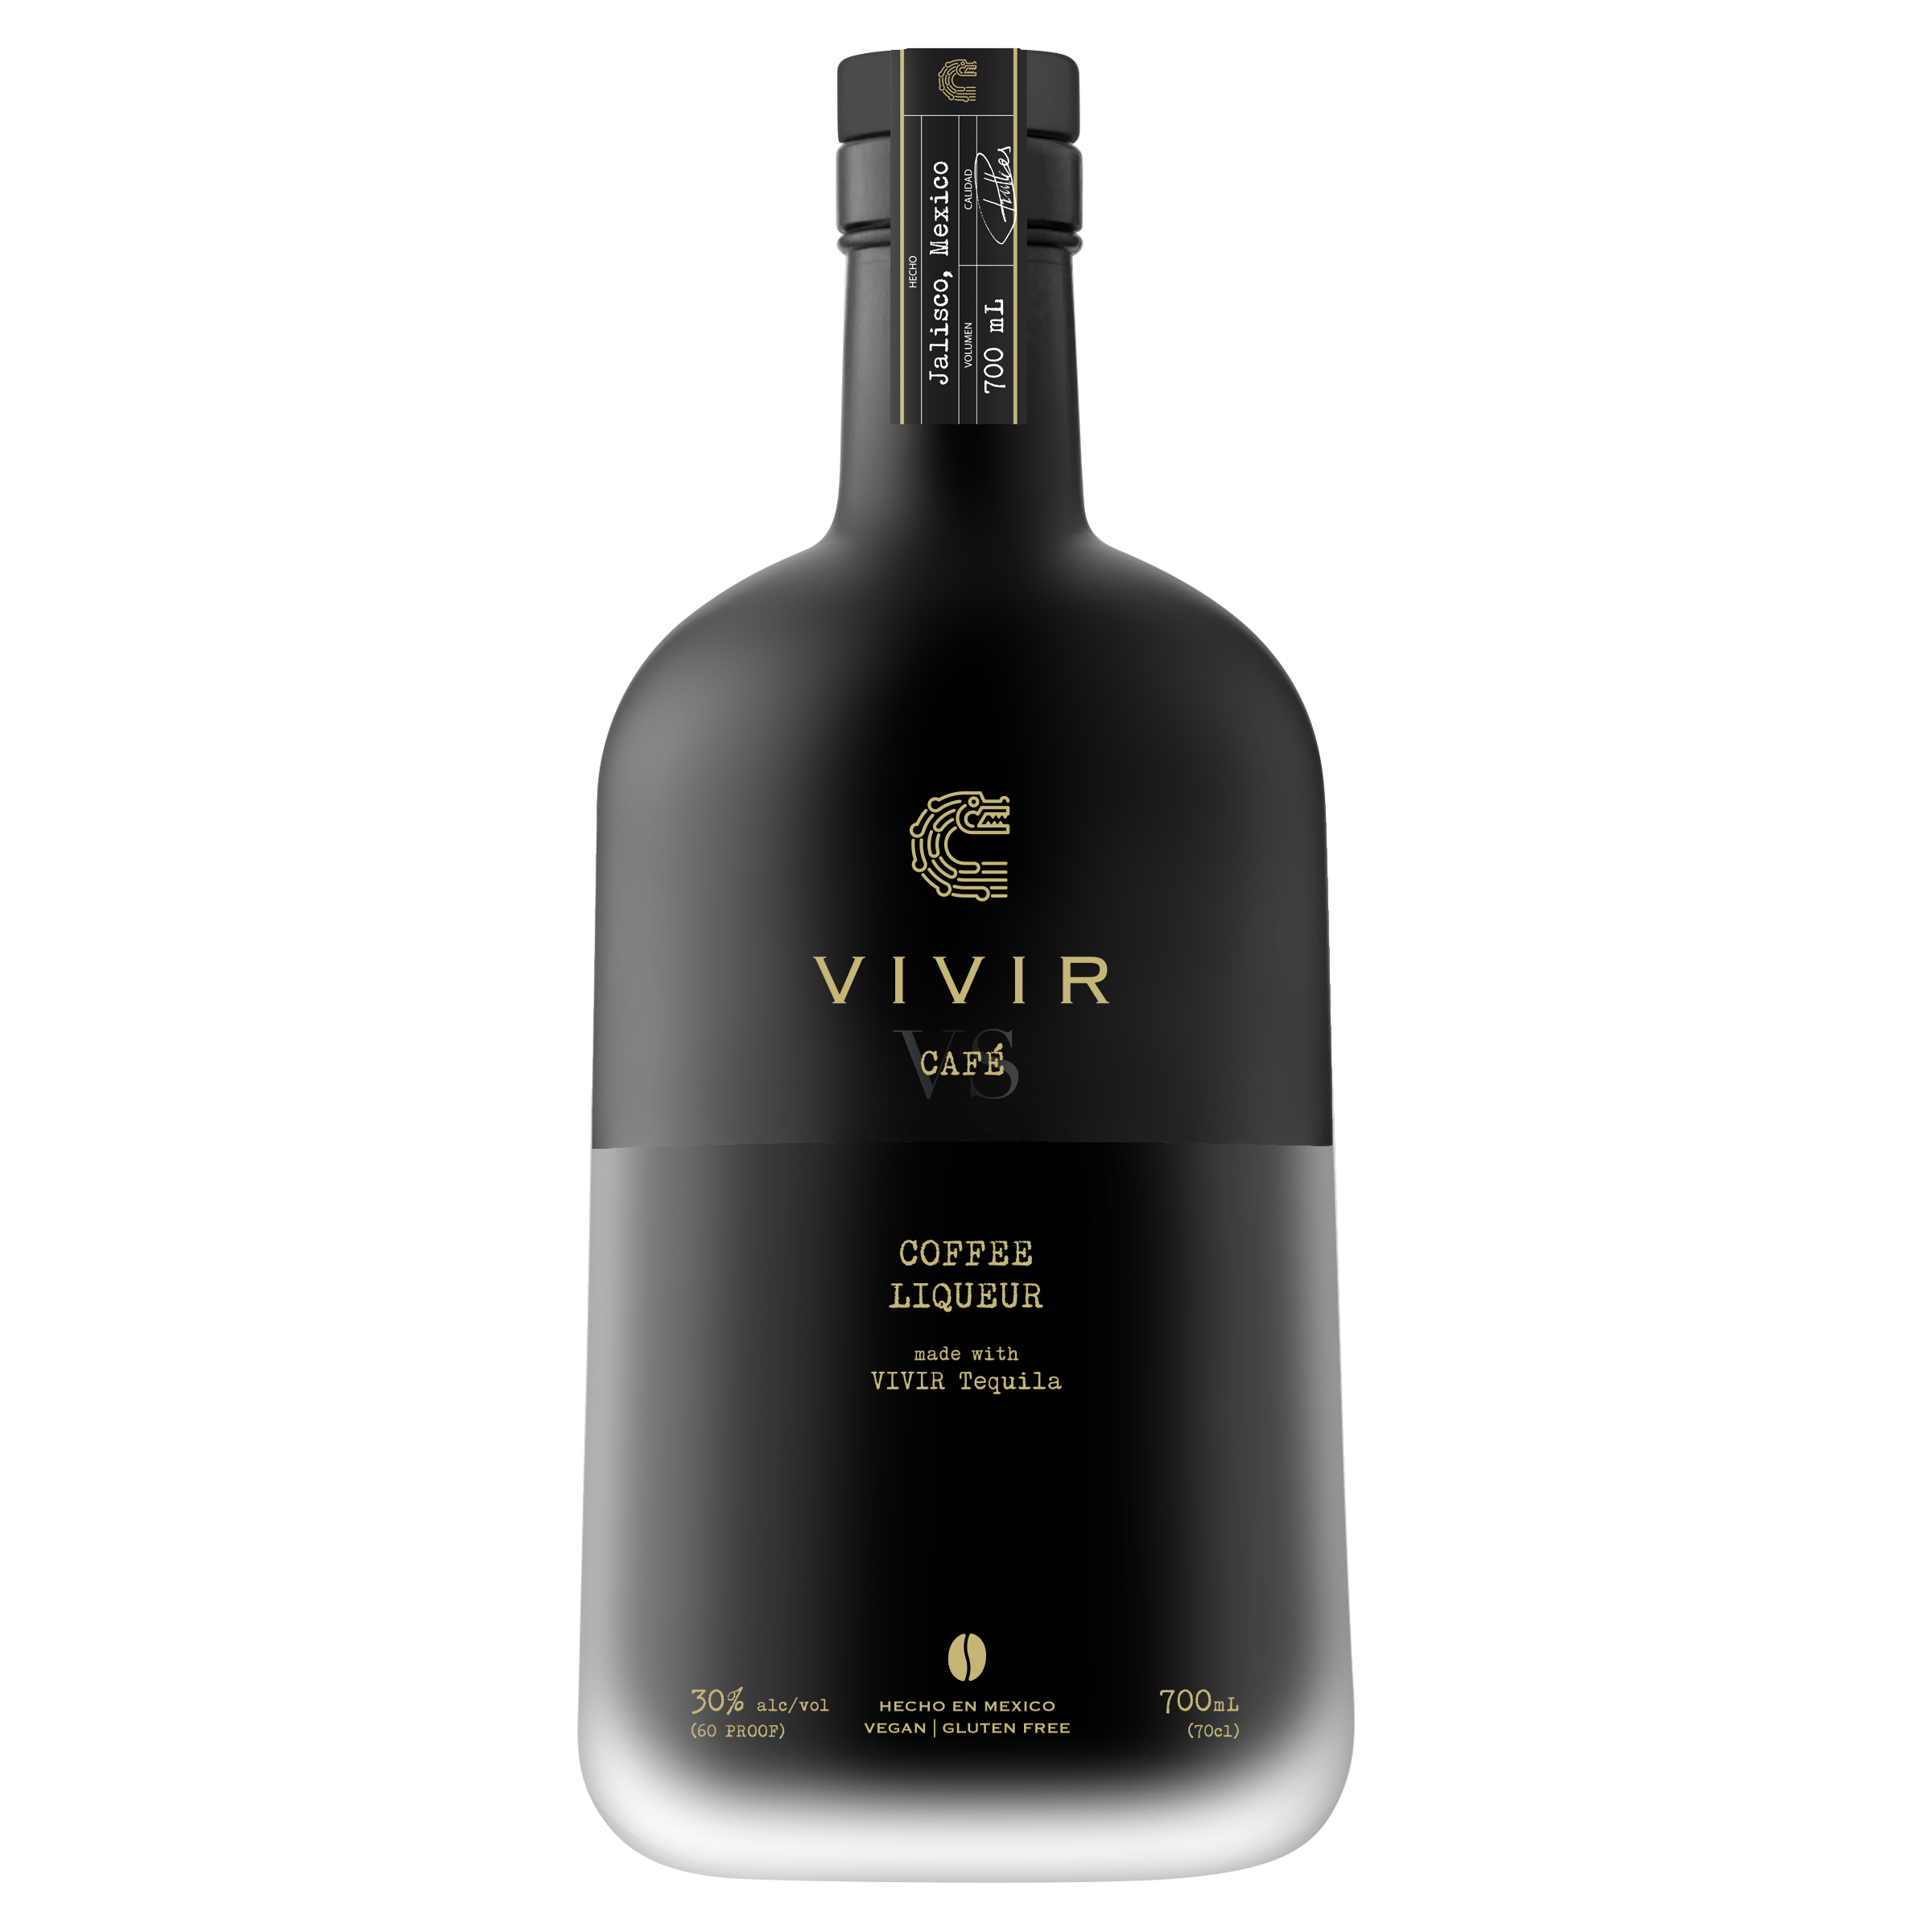 A bottle of VIVIR Café VS. The top half of the bottle is black and displays the VIVIR Café logo in gold, and the bottom half of the bottle is frosted transparent showing the dark coffee-coloured liqueur inside.